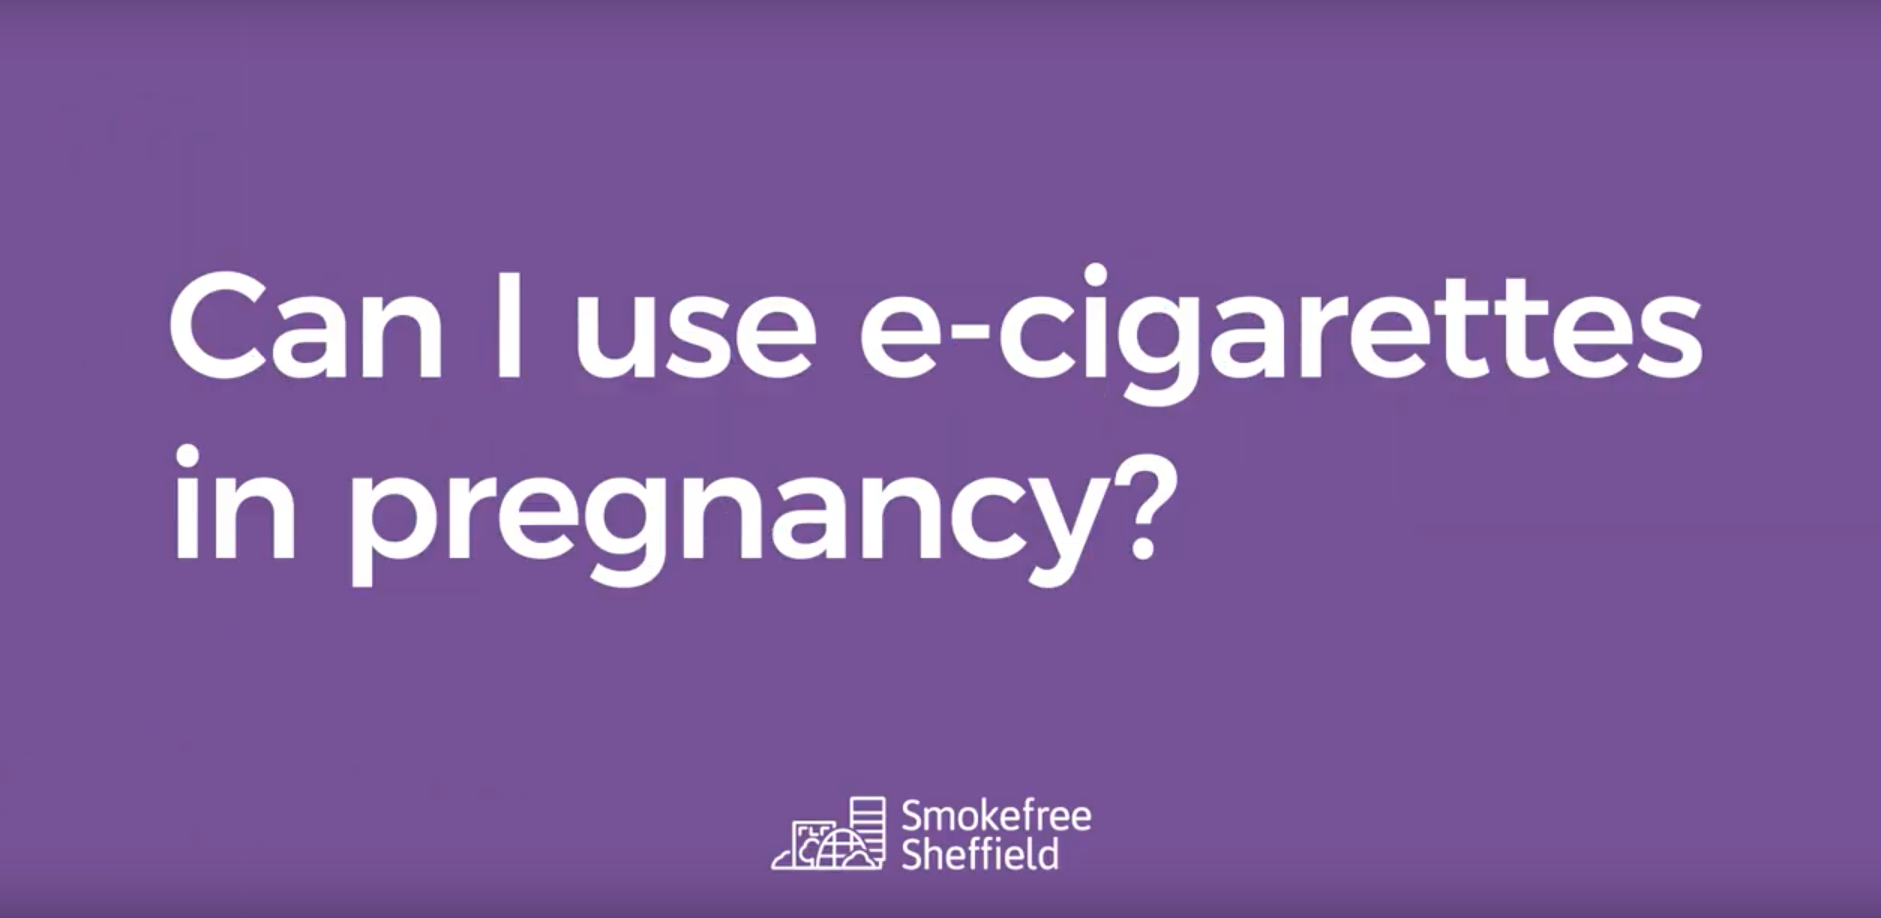 Screenshot from Smoking in Pregnancy Video